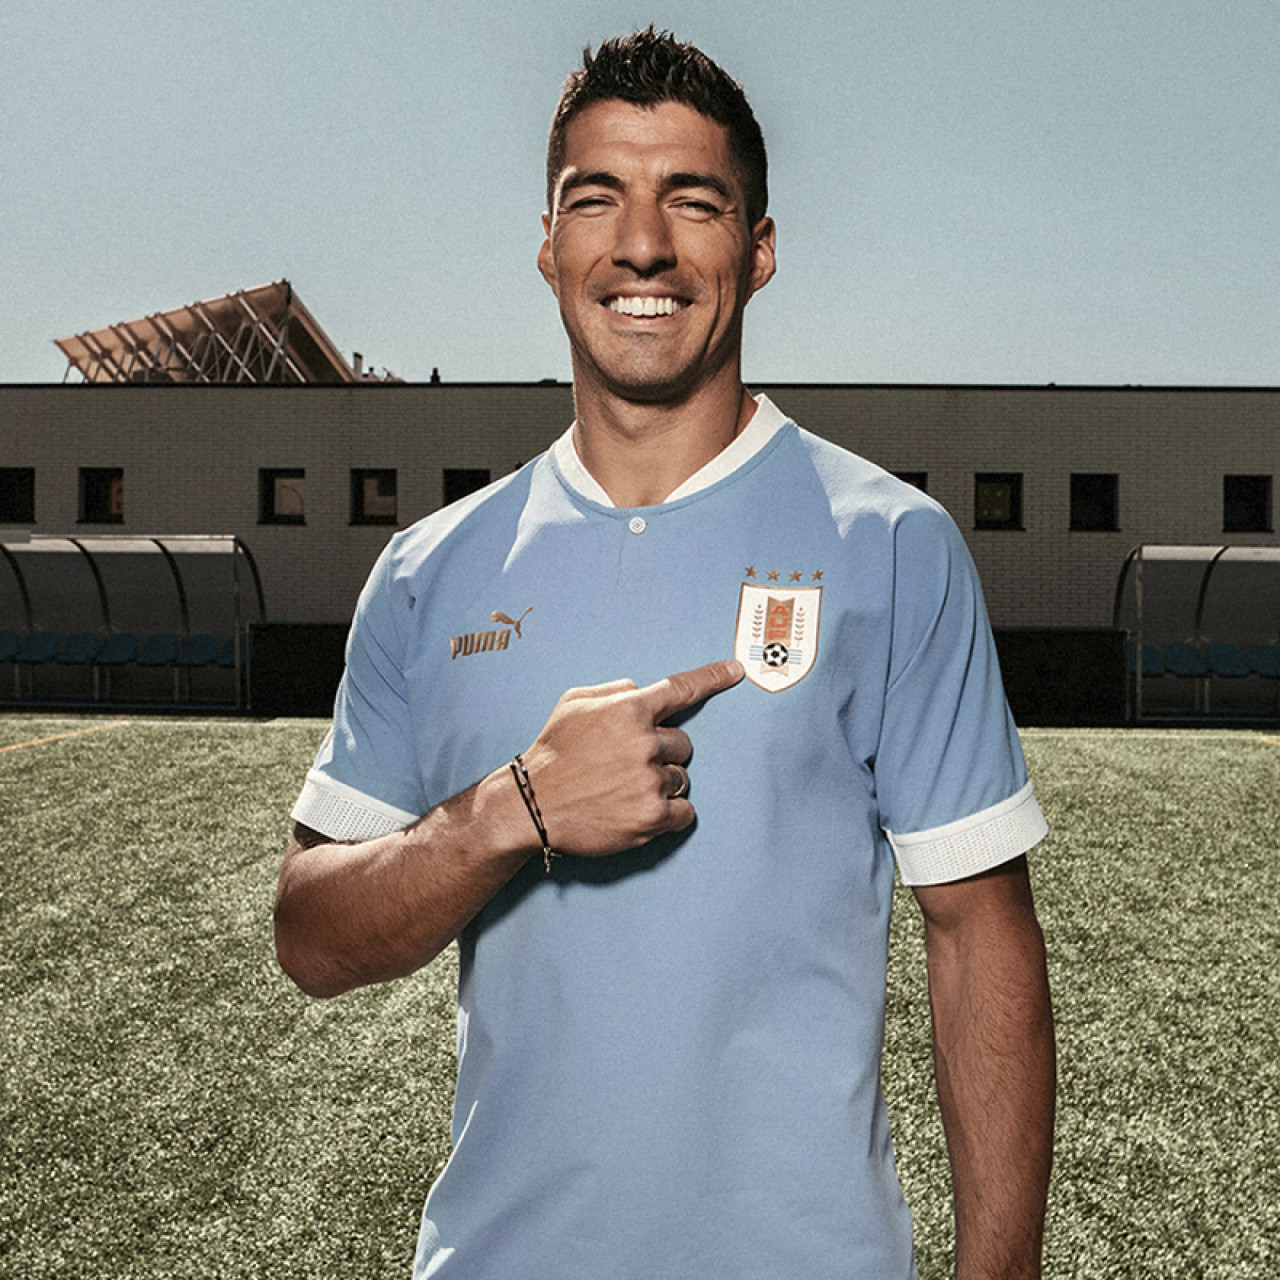 Men's Shirt Uruguaya Camiseta Celeste Remera Titular Official Soccer Team Shirt Uruguay by Puma - 2022 Edition - Pampa Direct